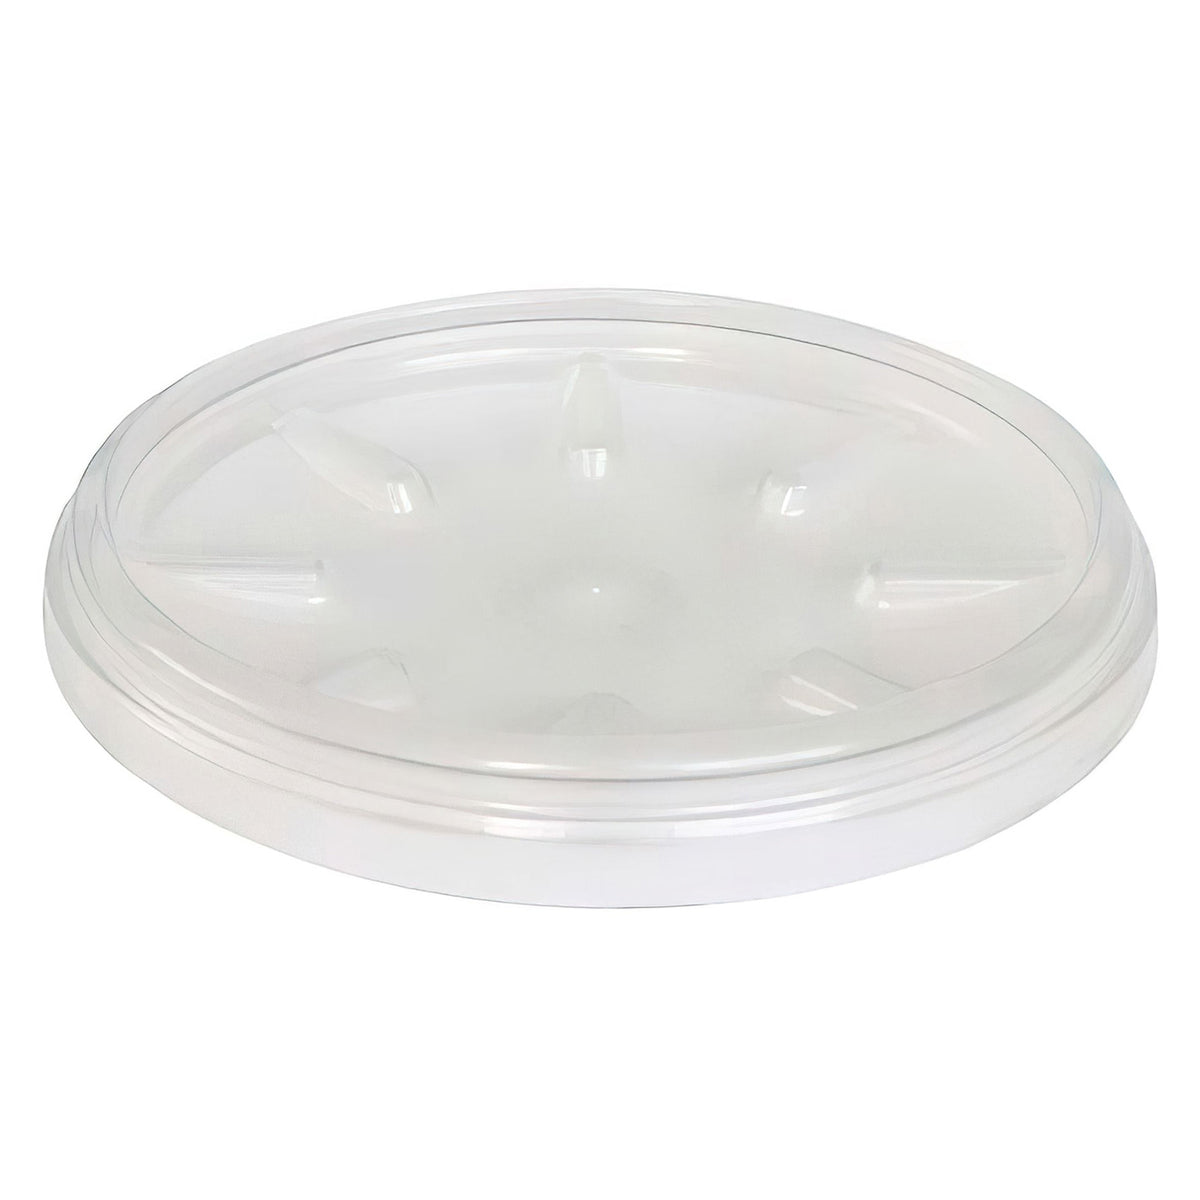 Yamaken Kougyou Plastic Saucer for Water Pitcher